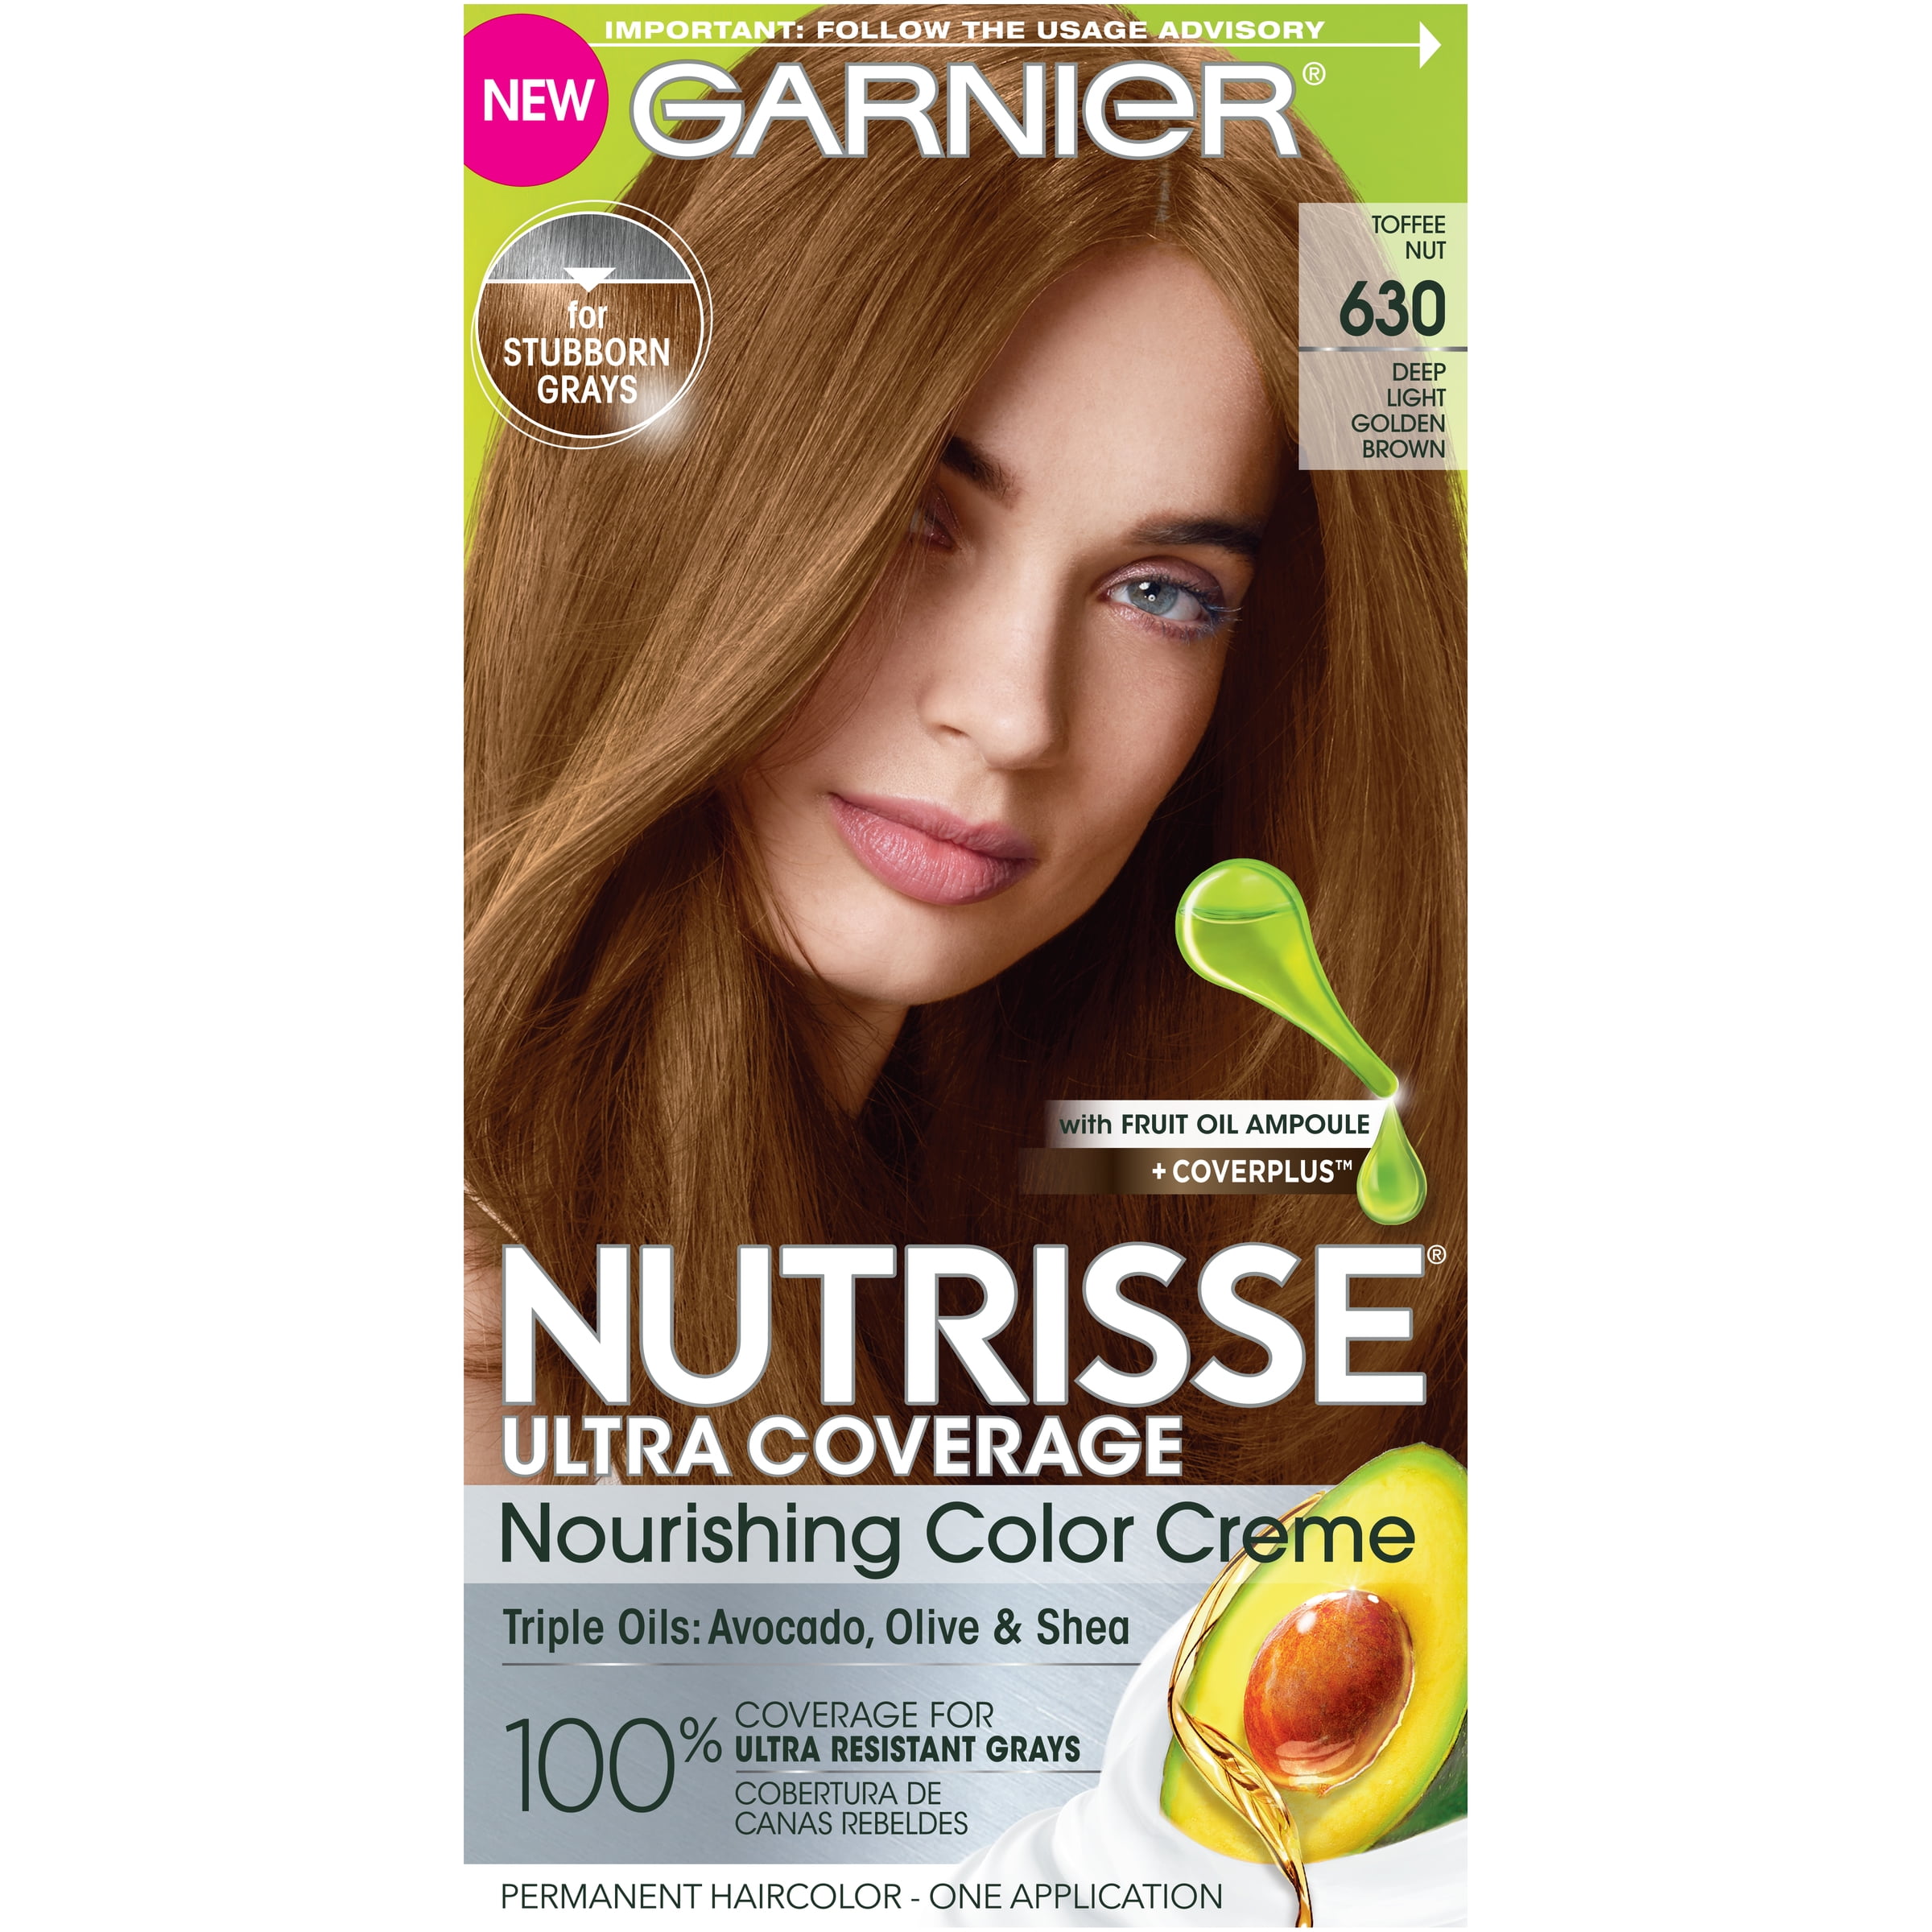 Garnier Nutrisse Nourishing Hair Color Creme, 630 Deep Light Golden Brown -  